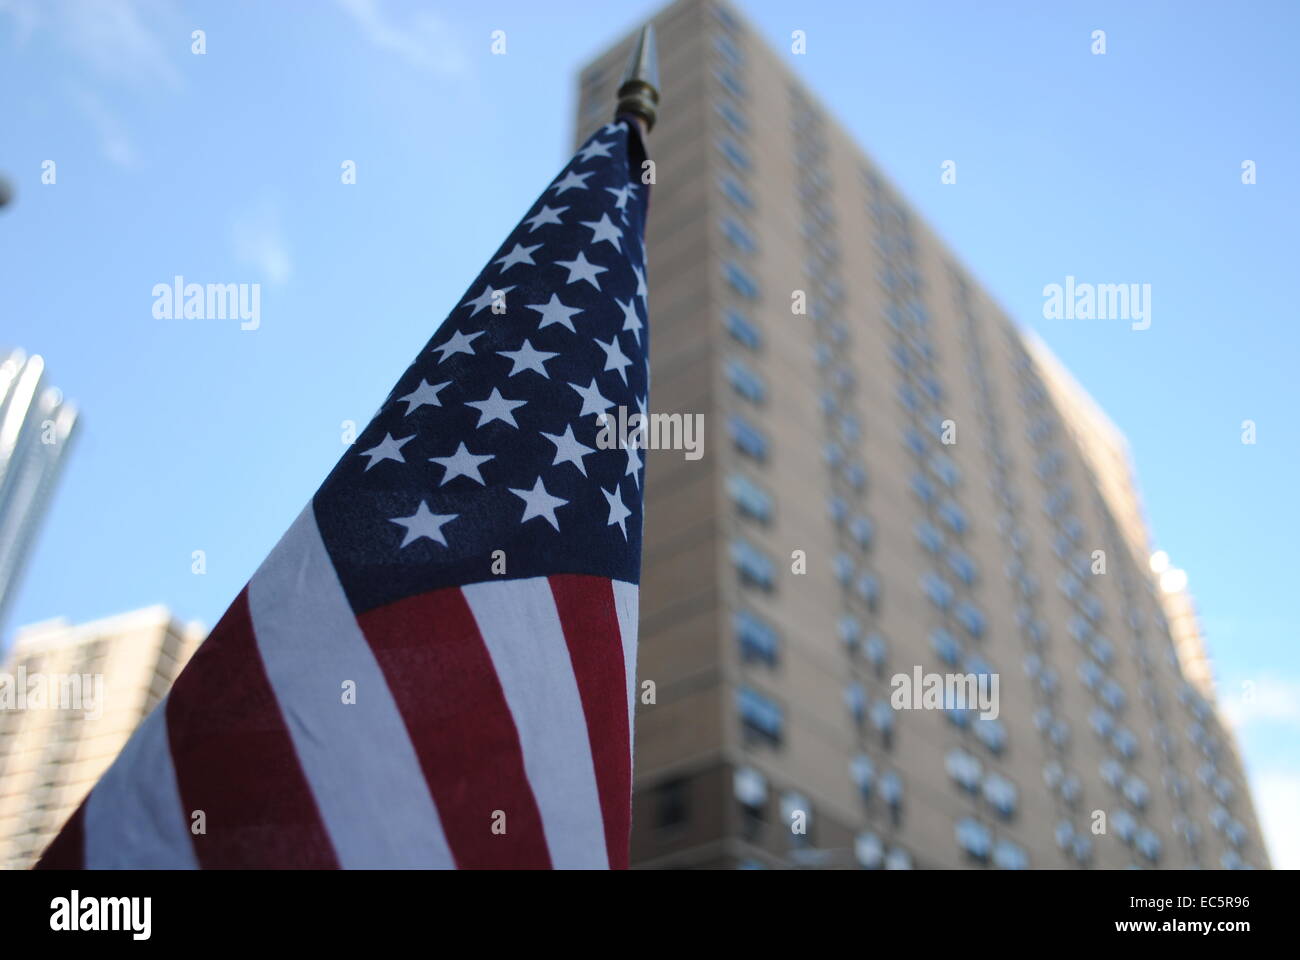 USA-Flagge, NYC, Manhattan, USA Stock Photo